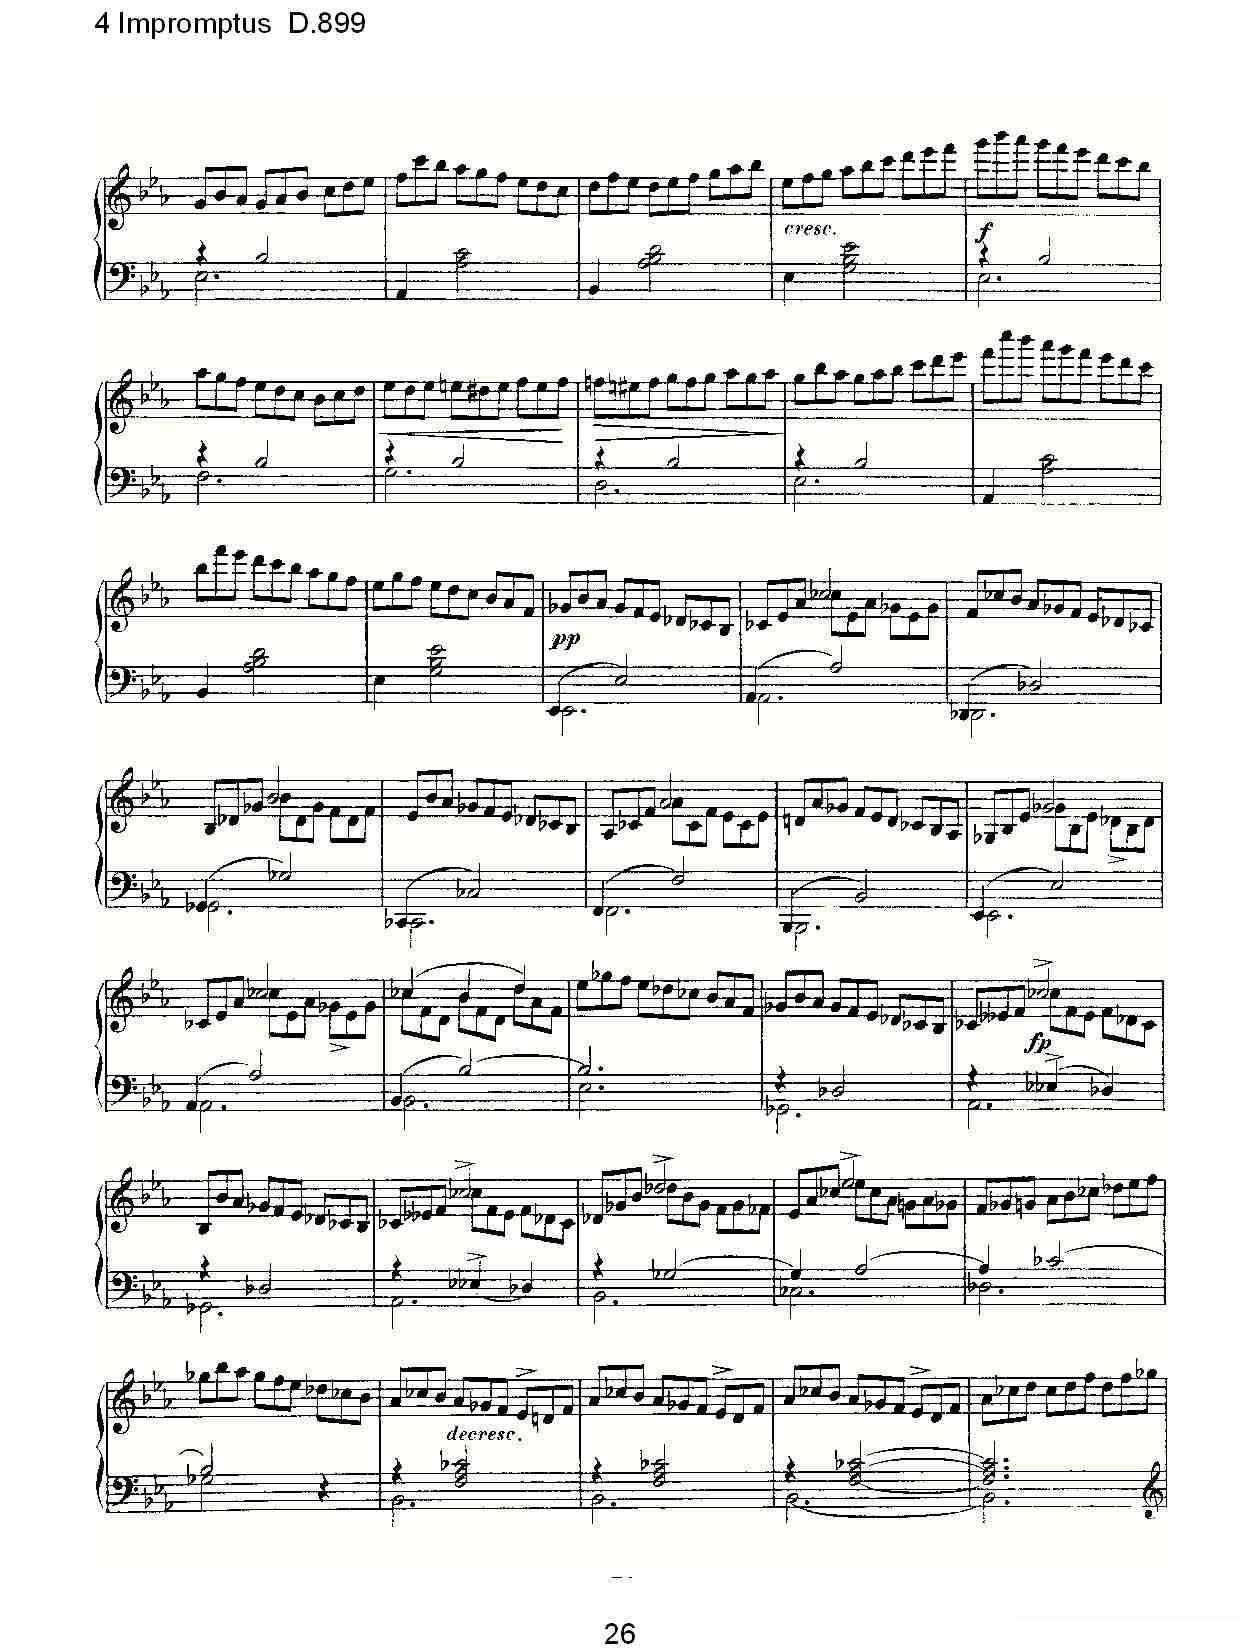 4 Impromptus D.899（4人即兴演奏 D.899）钢琴曲谱（图26）